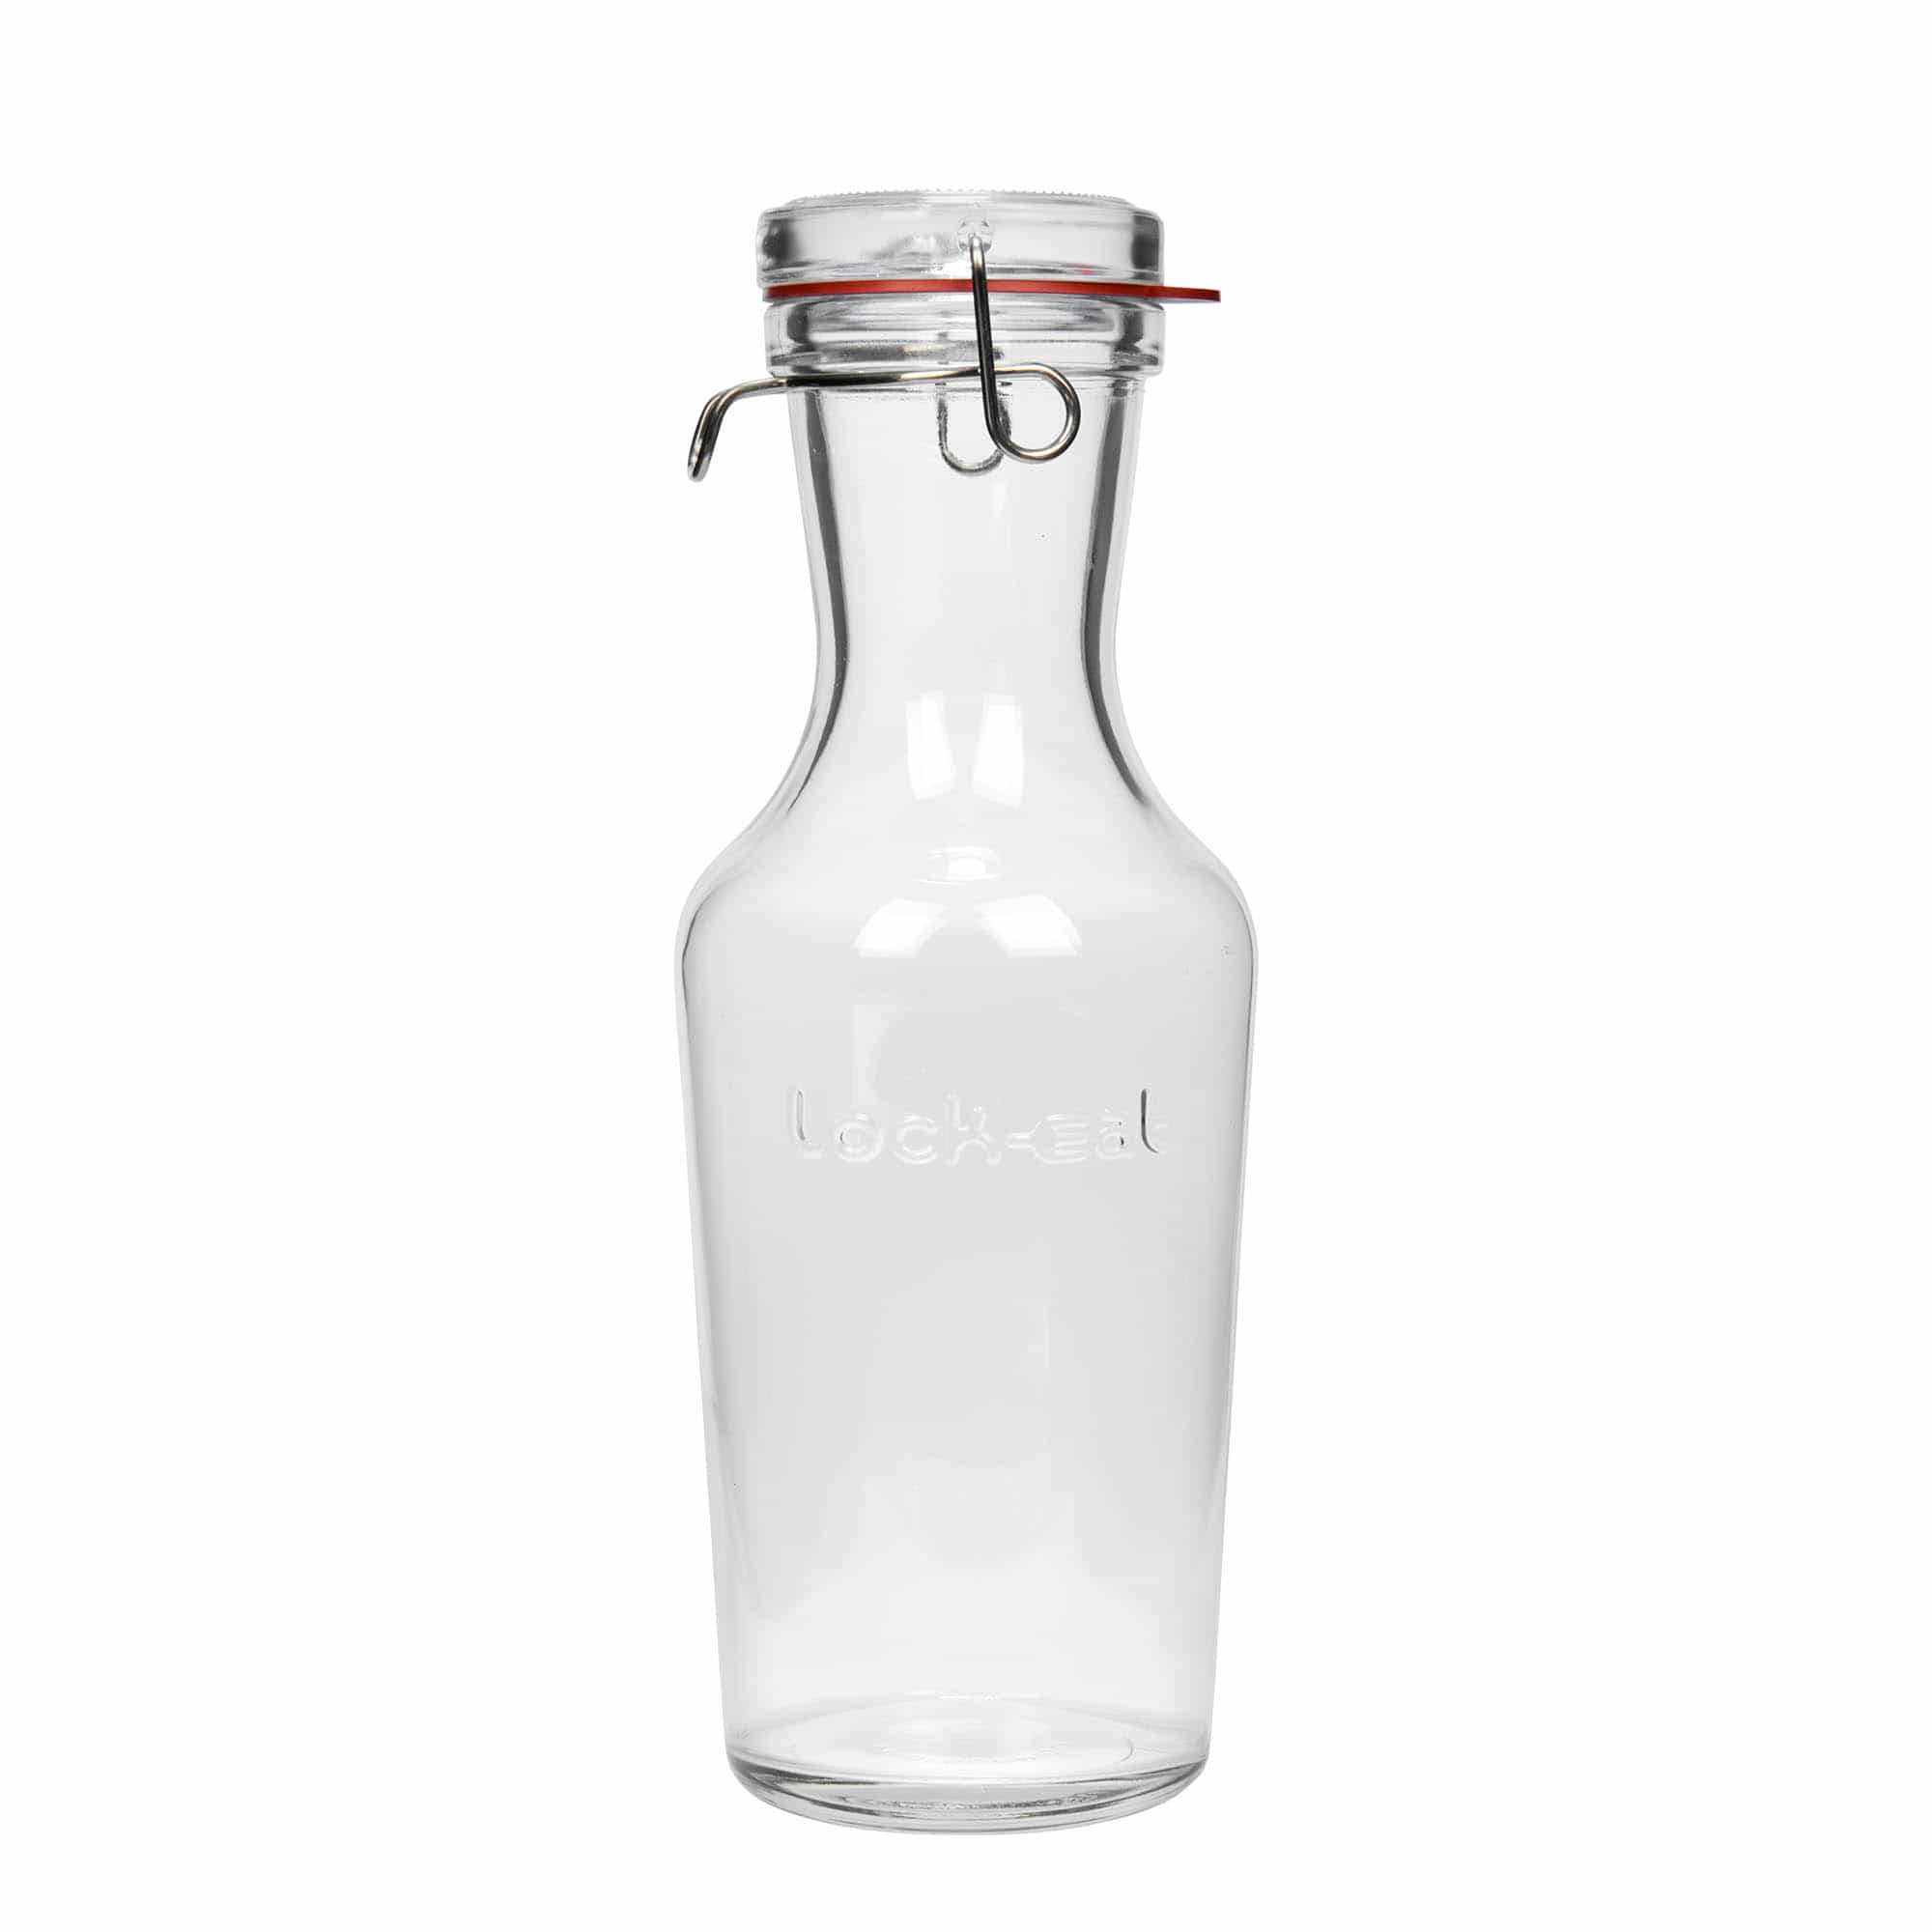 1,000 ml glass carafe 'Lock-Eat', closure: clip top